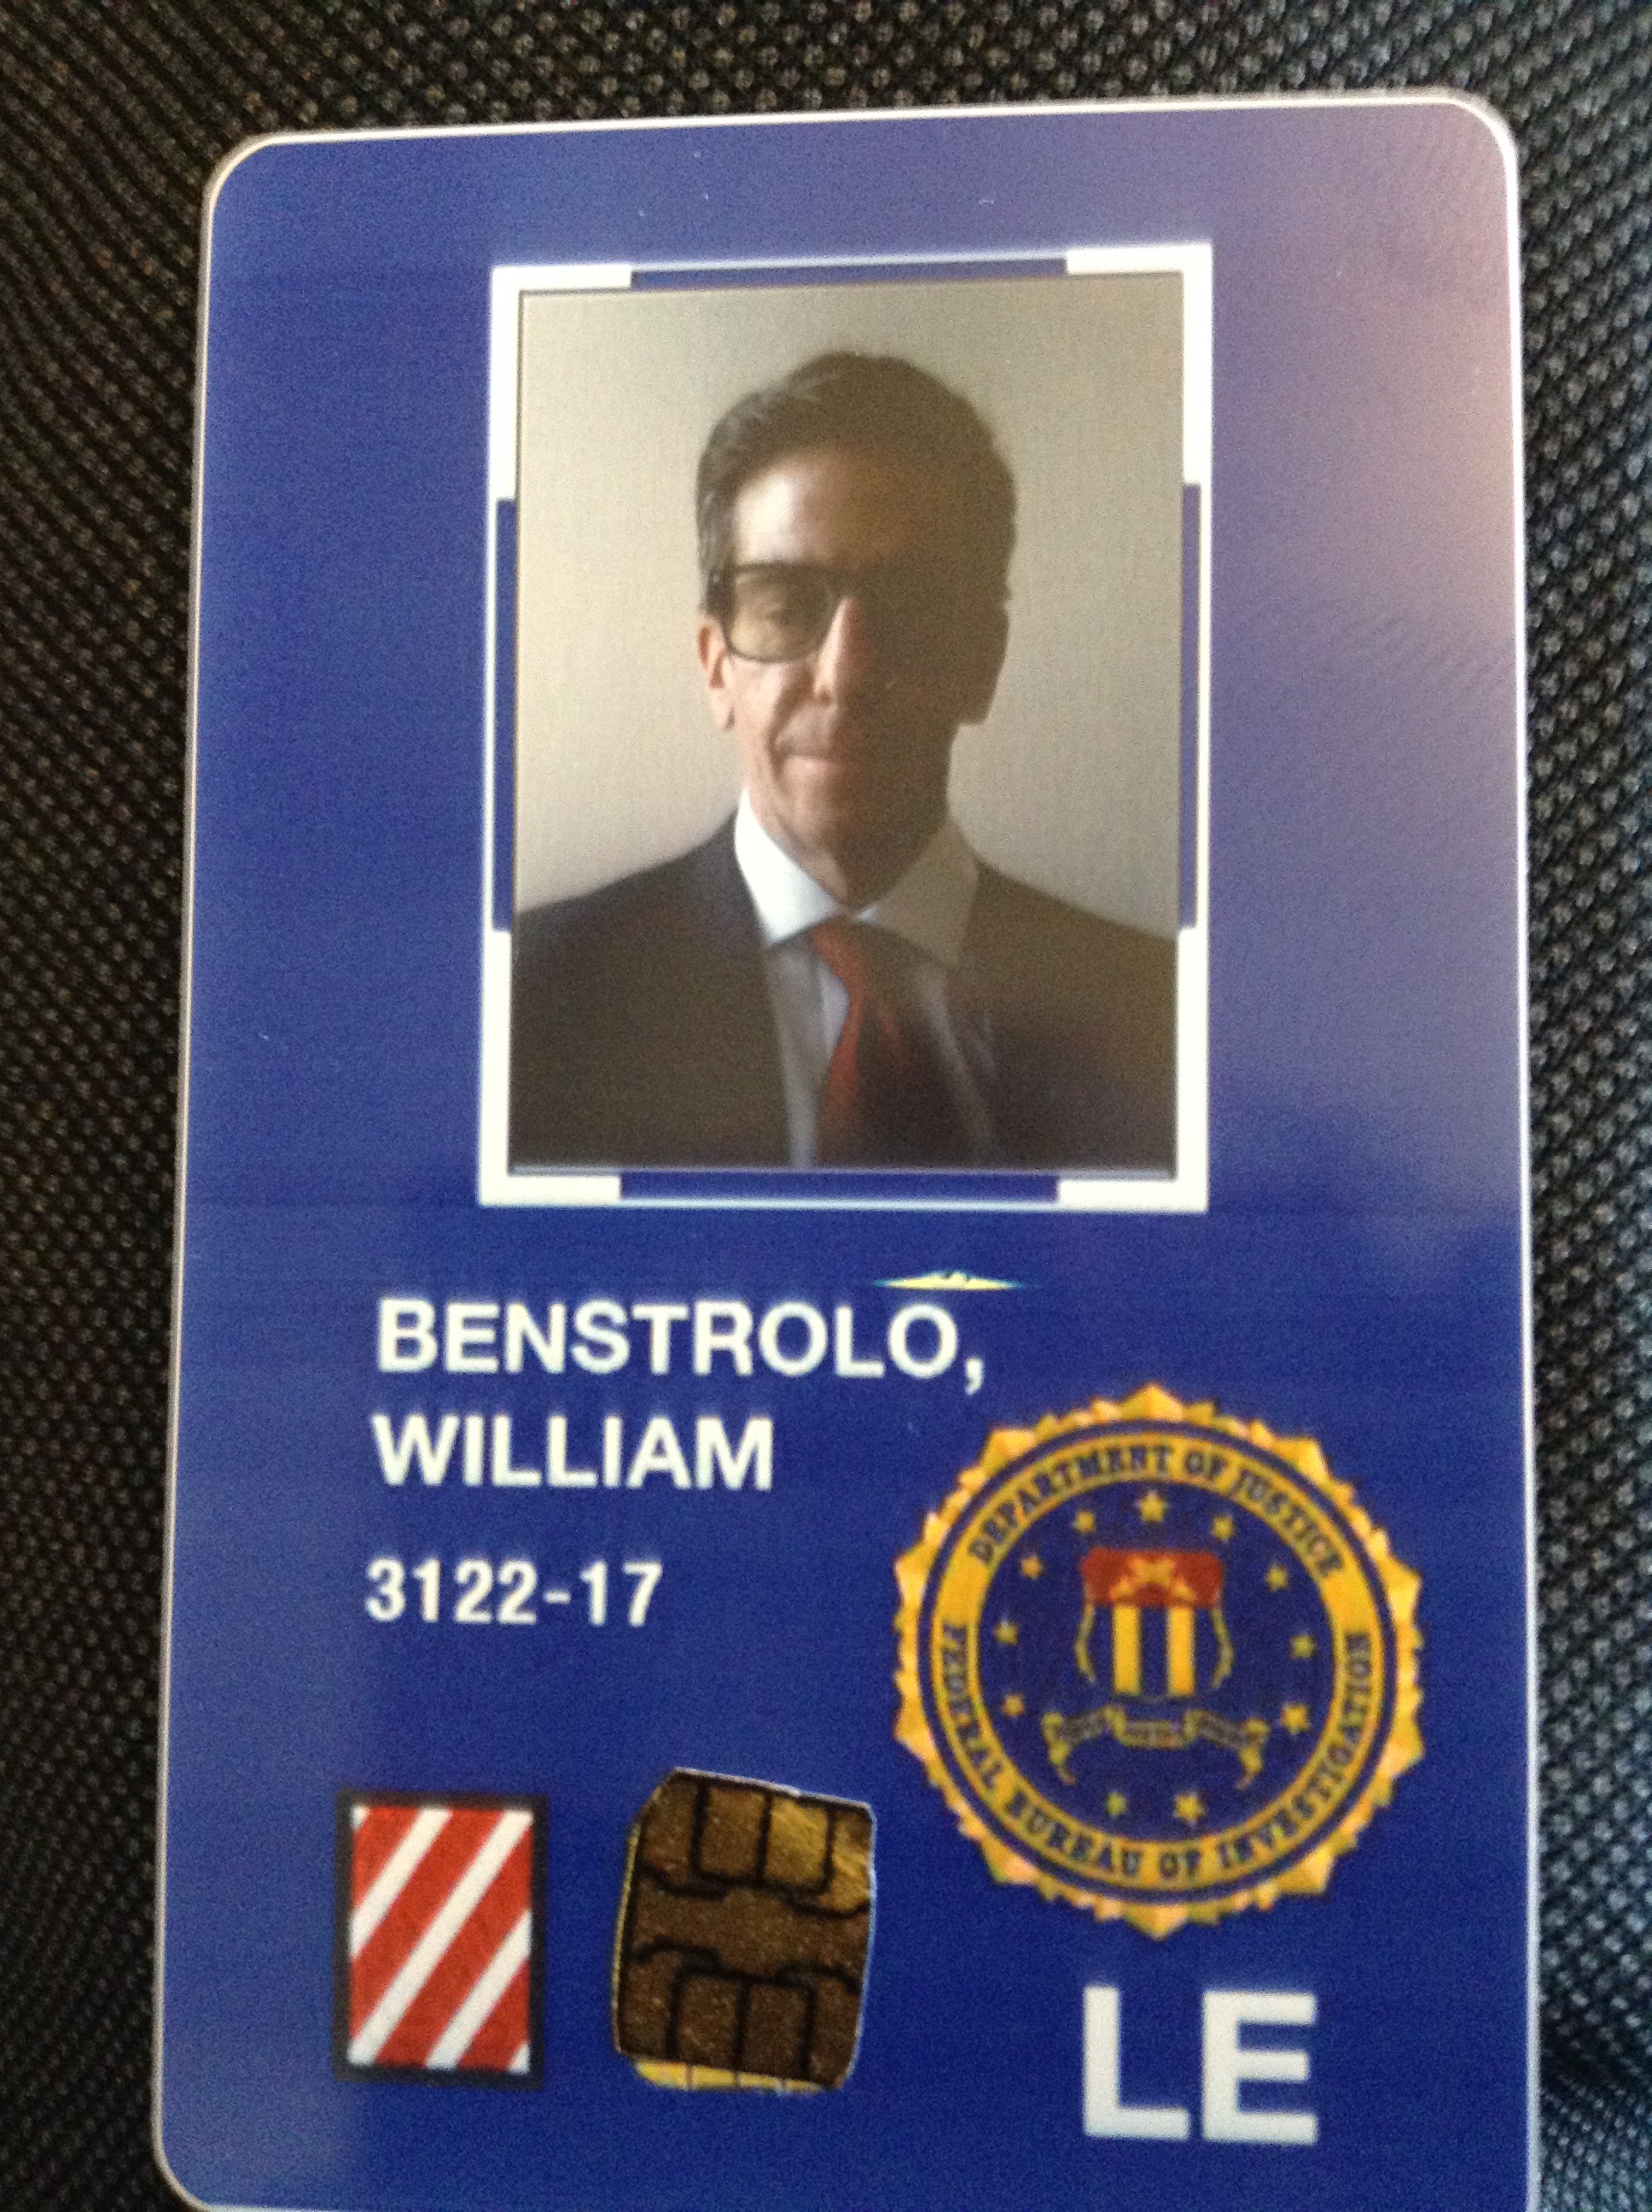 Elementary, FBI Agent, (w/Badge) 7 24 15